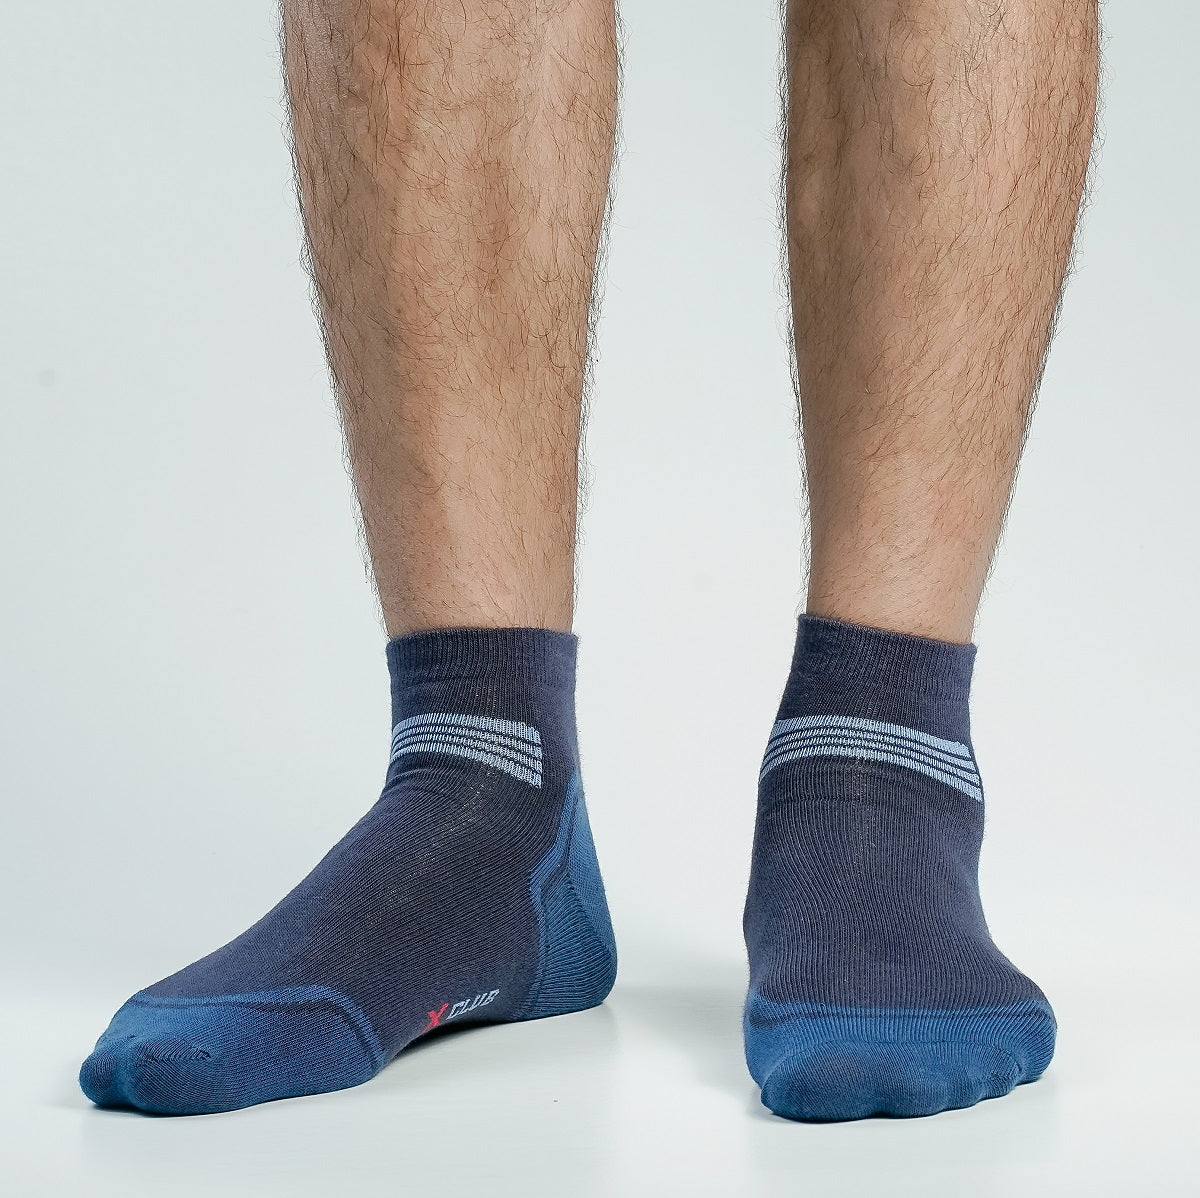 X Club Ankle Socks For Men